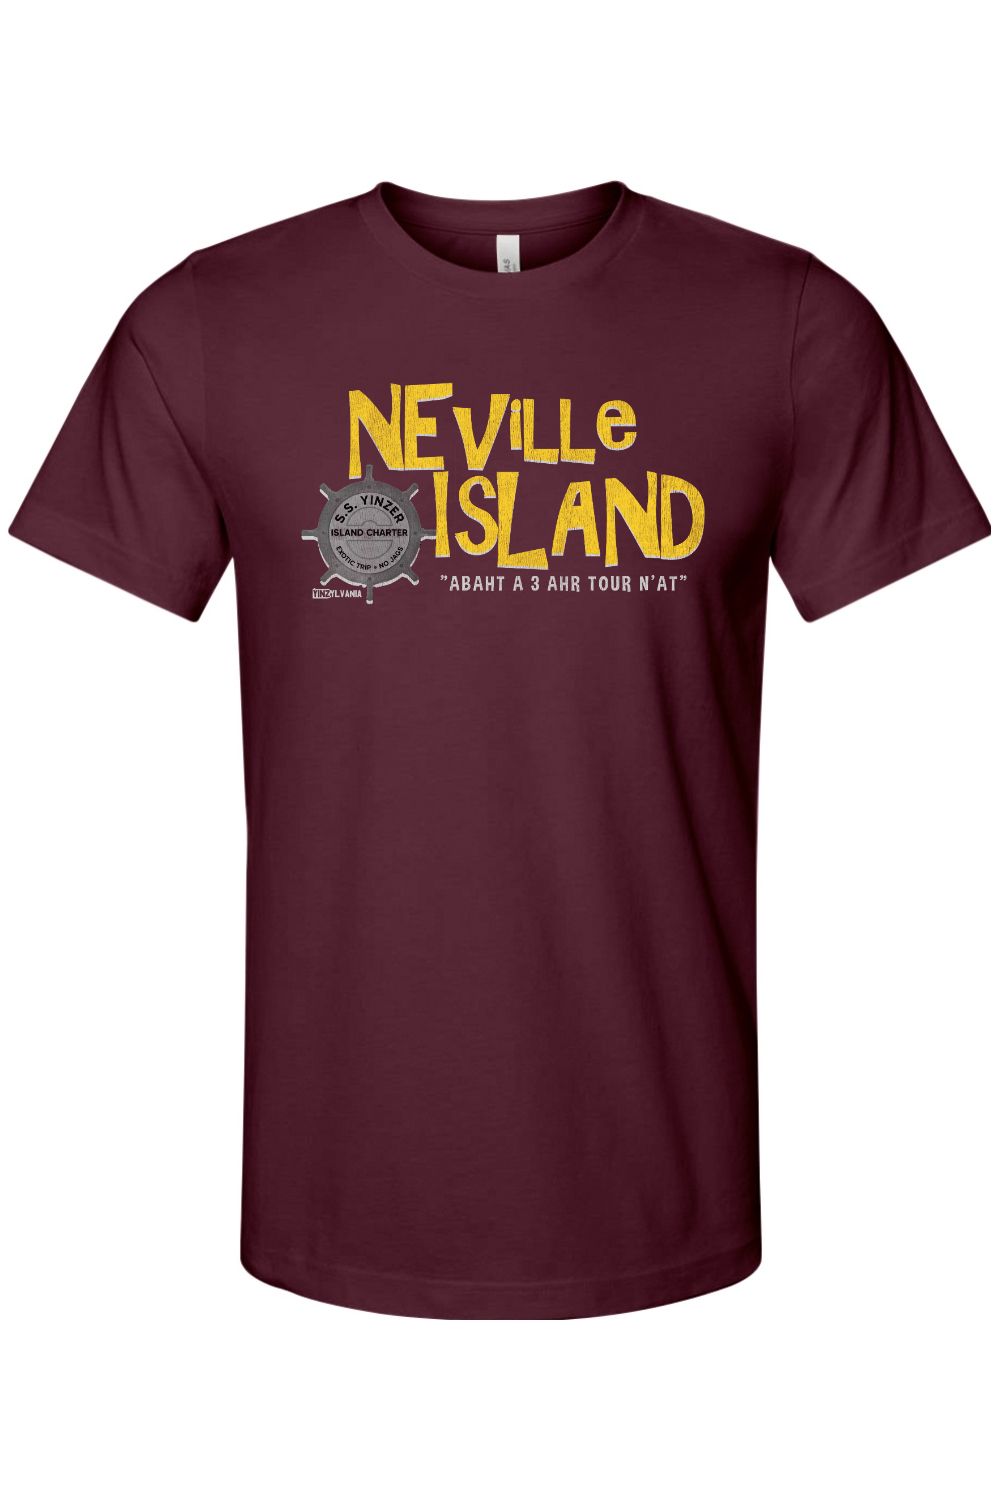 Neville Island - S.S. Yinzer - Yinzylvania